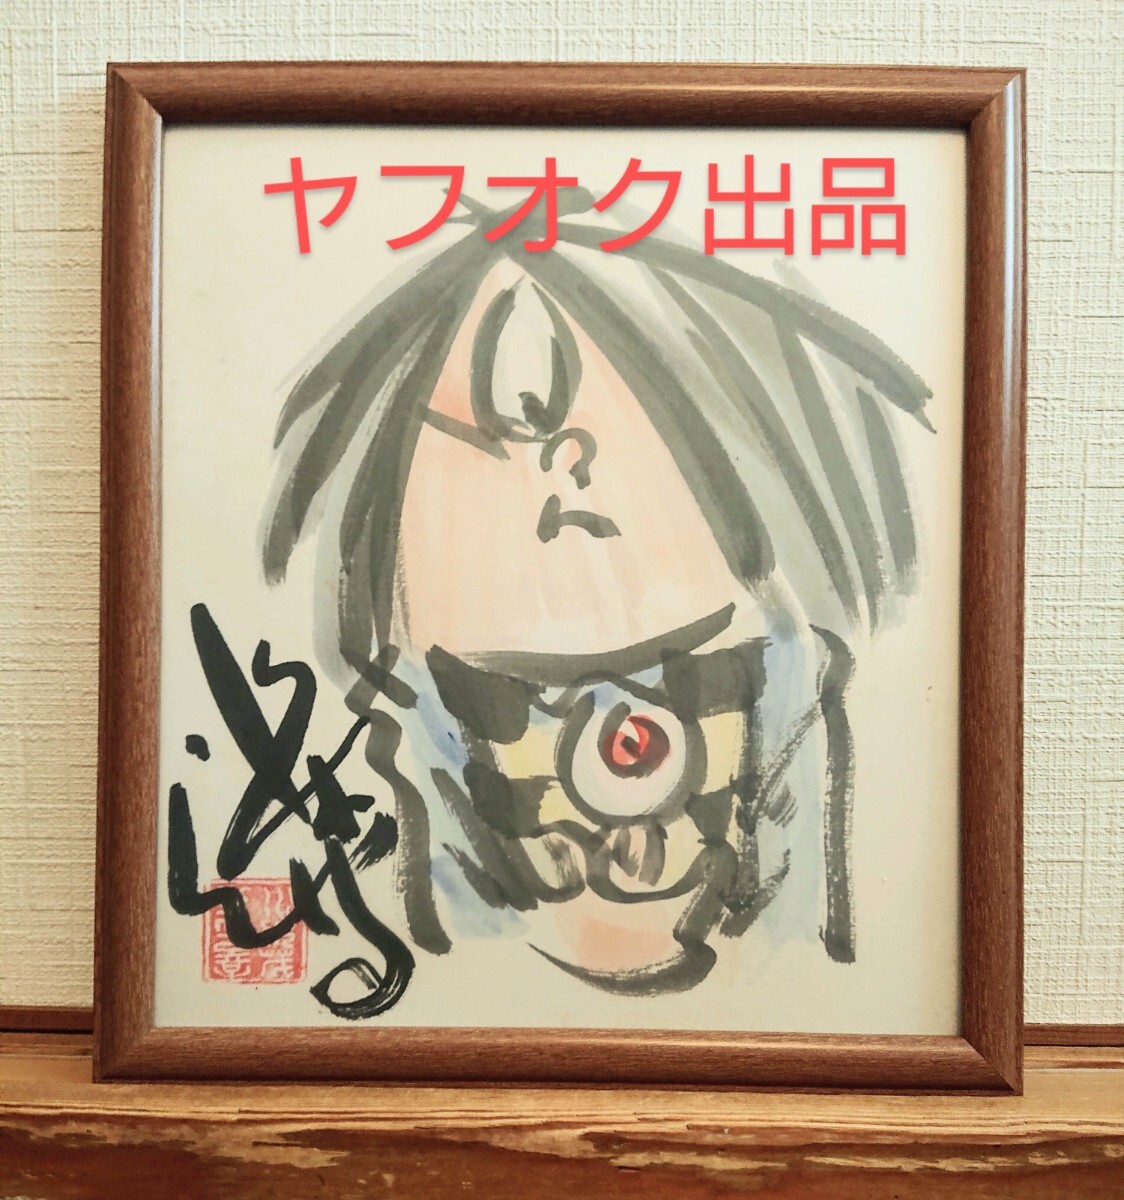 Shigeru Mizuki GeGeGe no Kitaro Sign ورق ملون بالألوان المائية, كاريكاتير, سلع الانمي, لافتة, اللوحة المرسومة باليد